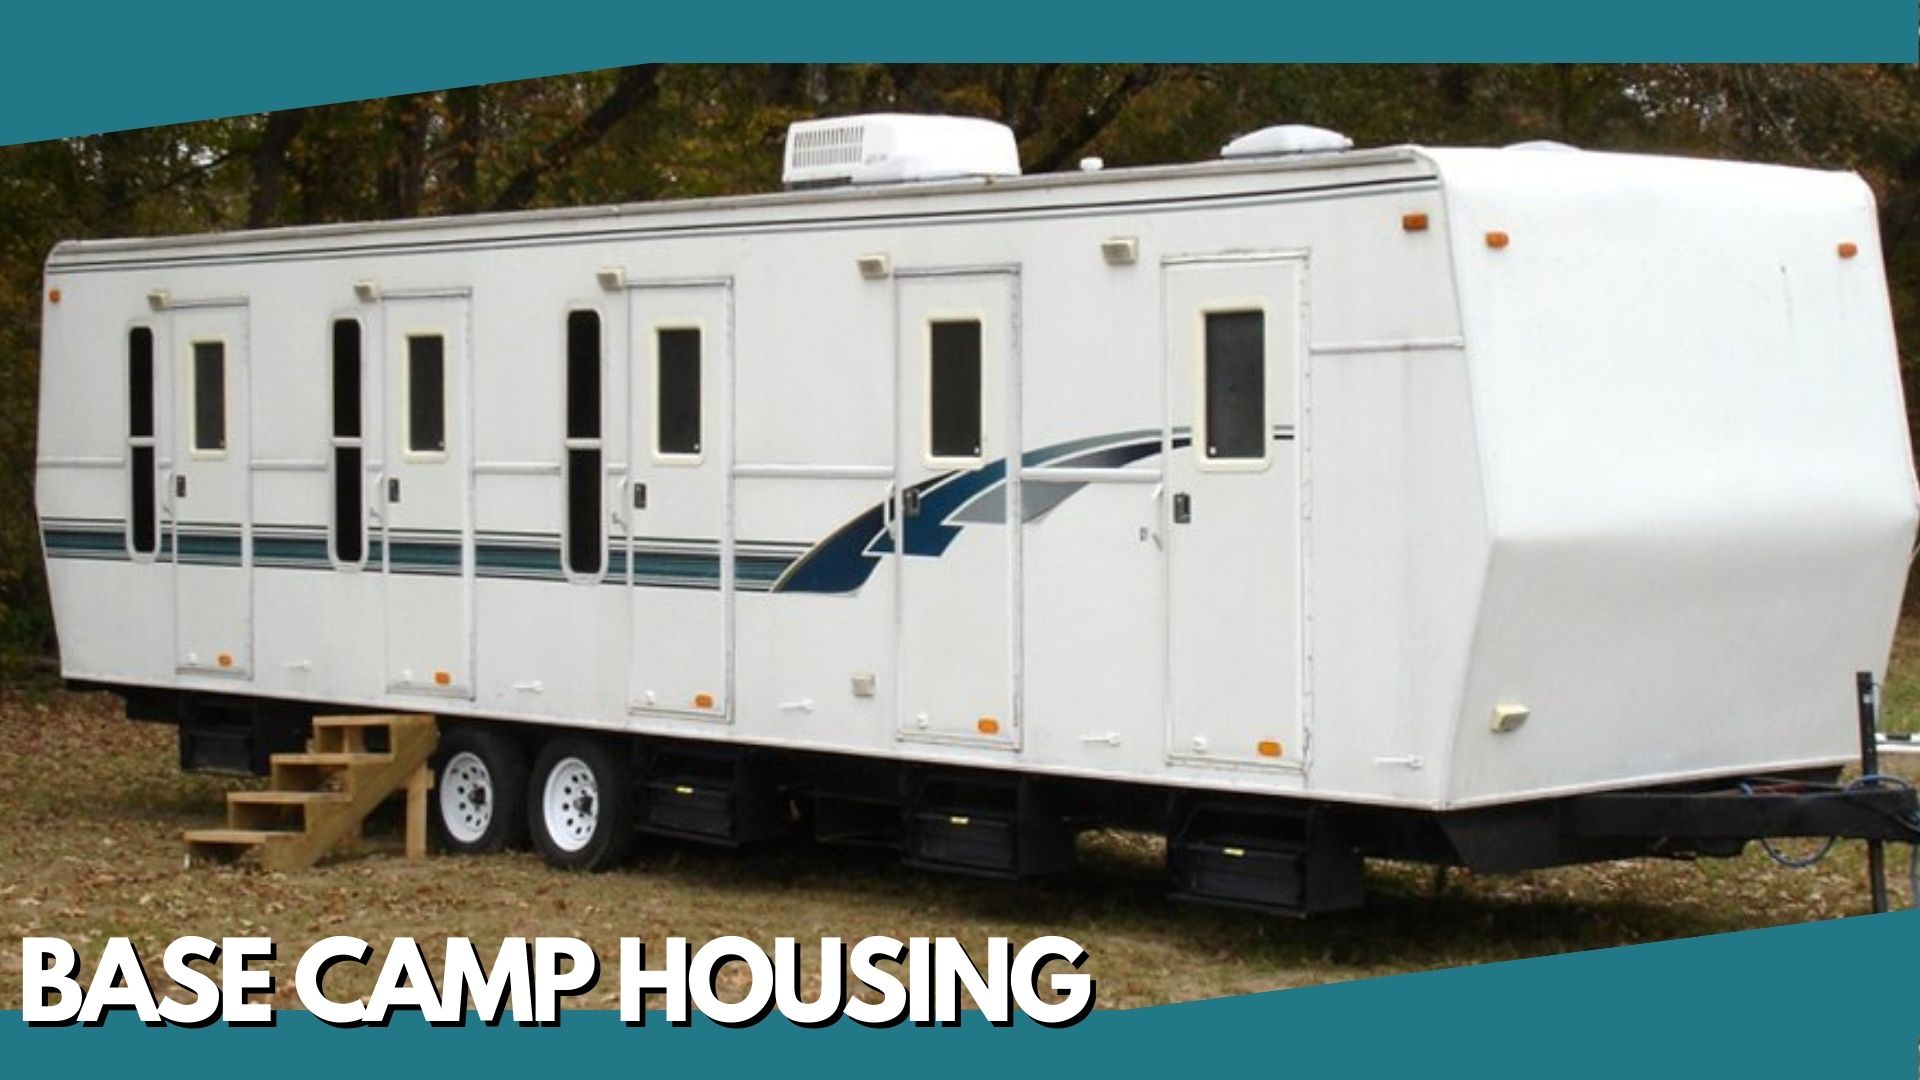 30ft-bunk-house-trailer-3-1024x512